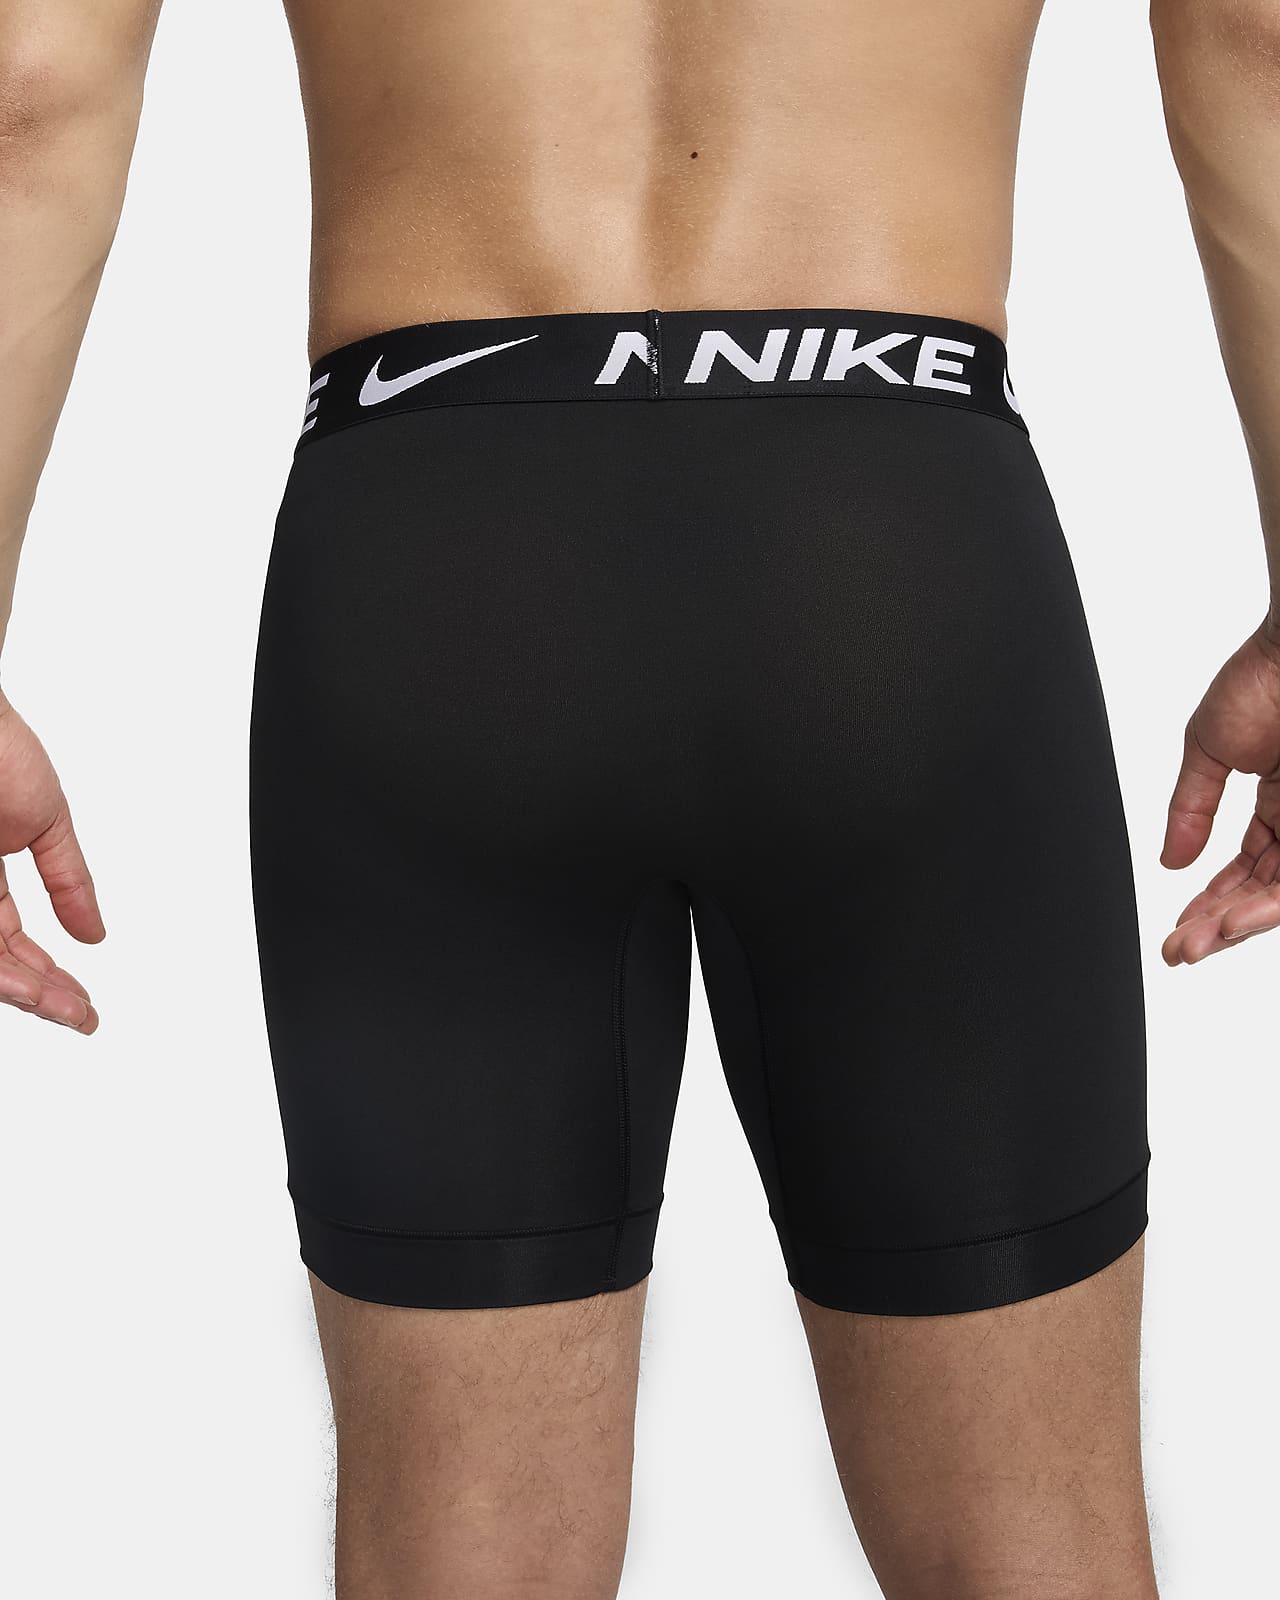 Nike Dri-FIT Elite Micro Men's Long Boxer Brief.